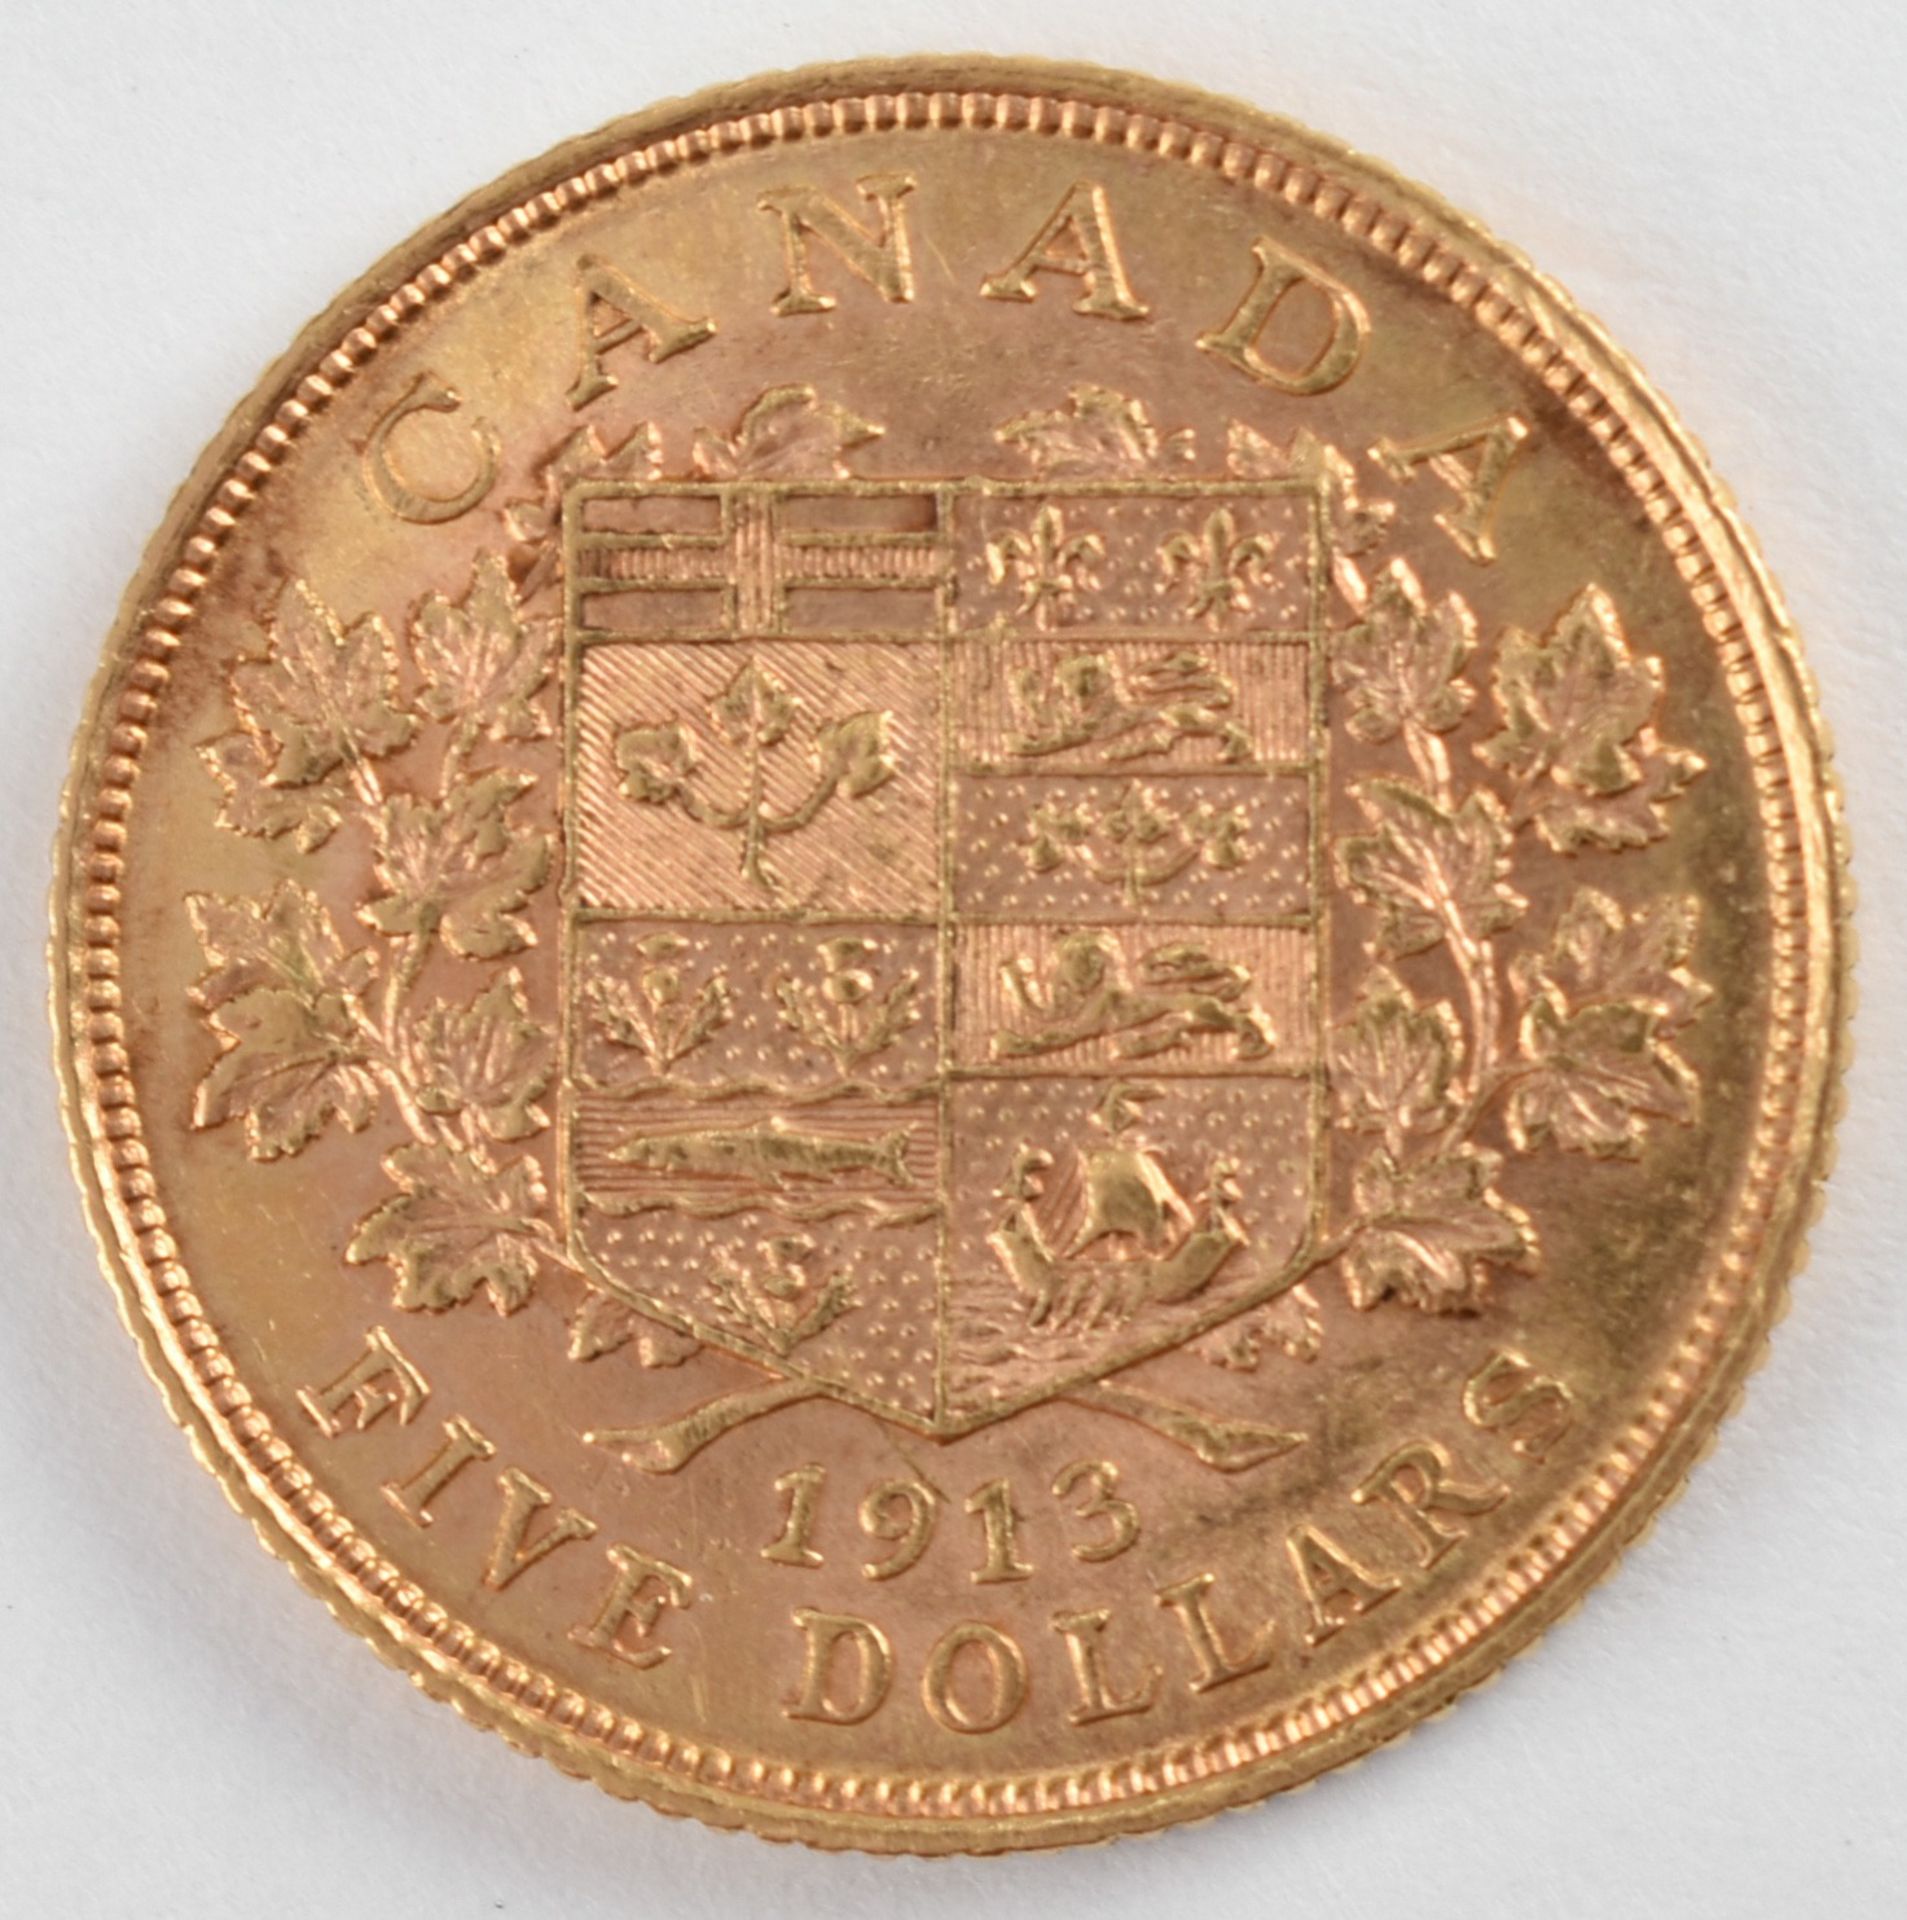 Goldmünze Kanada 1913 5 Dollars in Gold, 900/1000, 8,359 g, av. König George V. Brustbild mit - Bild 2 aus 3